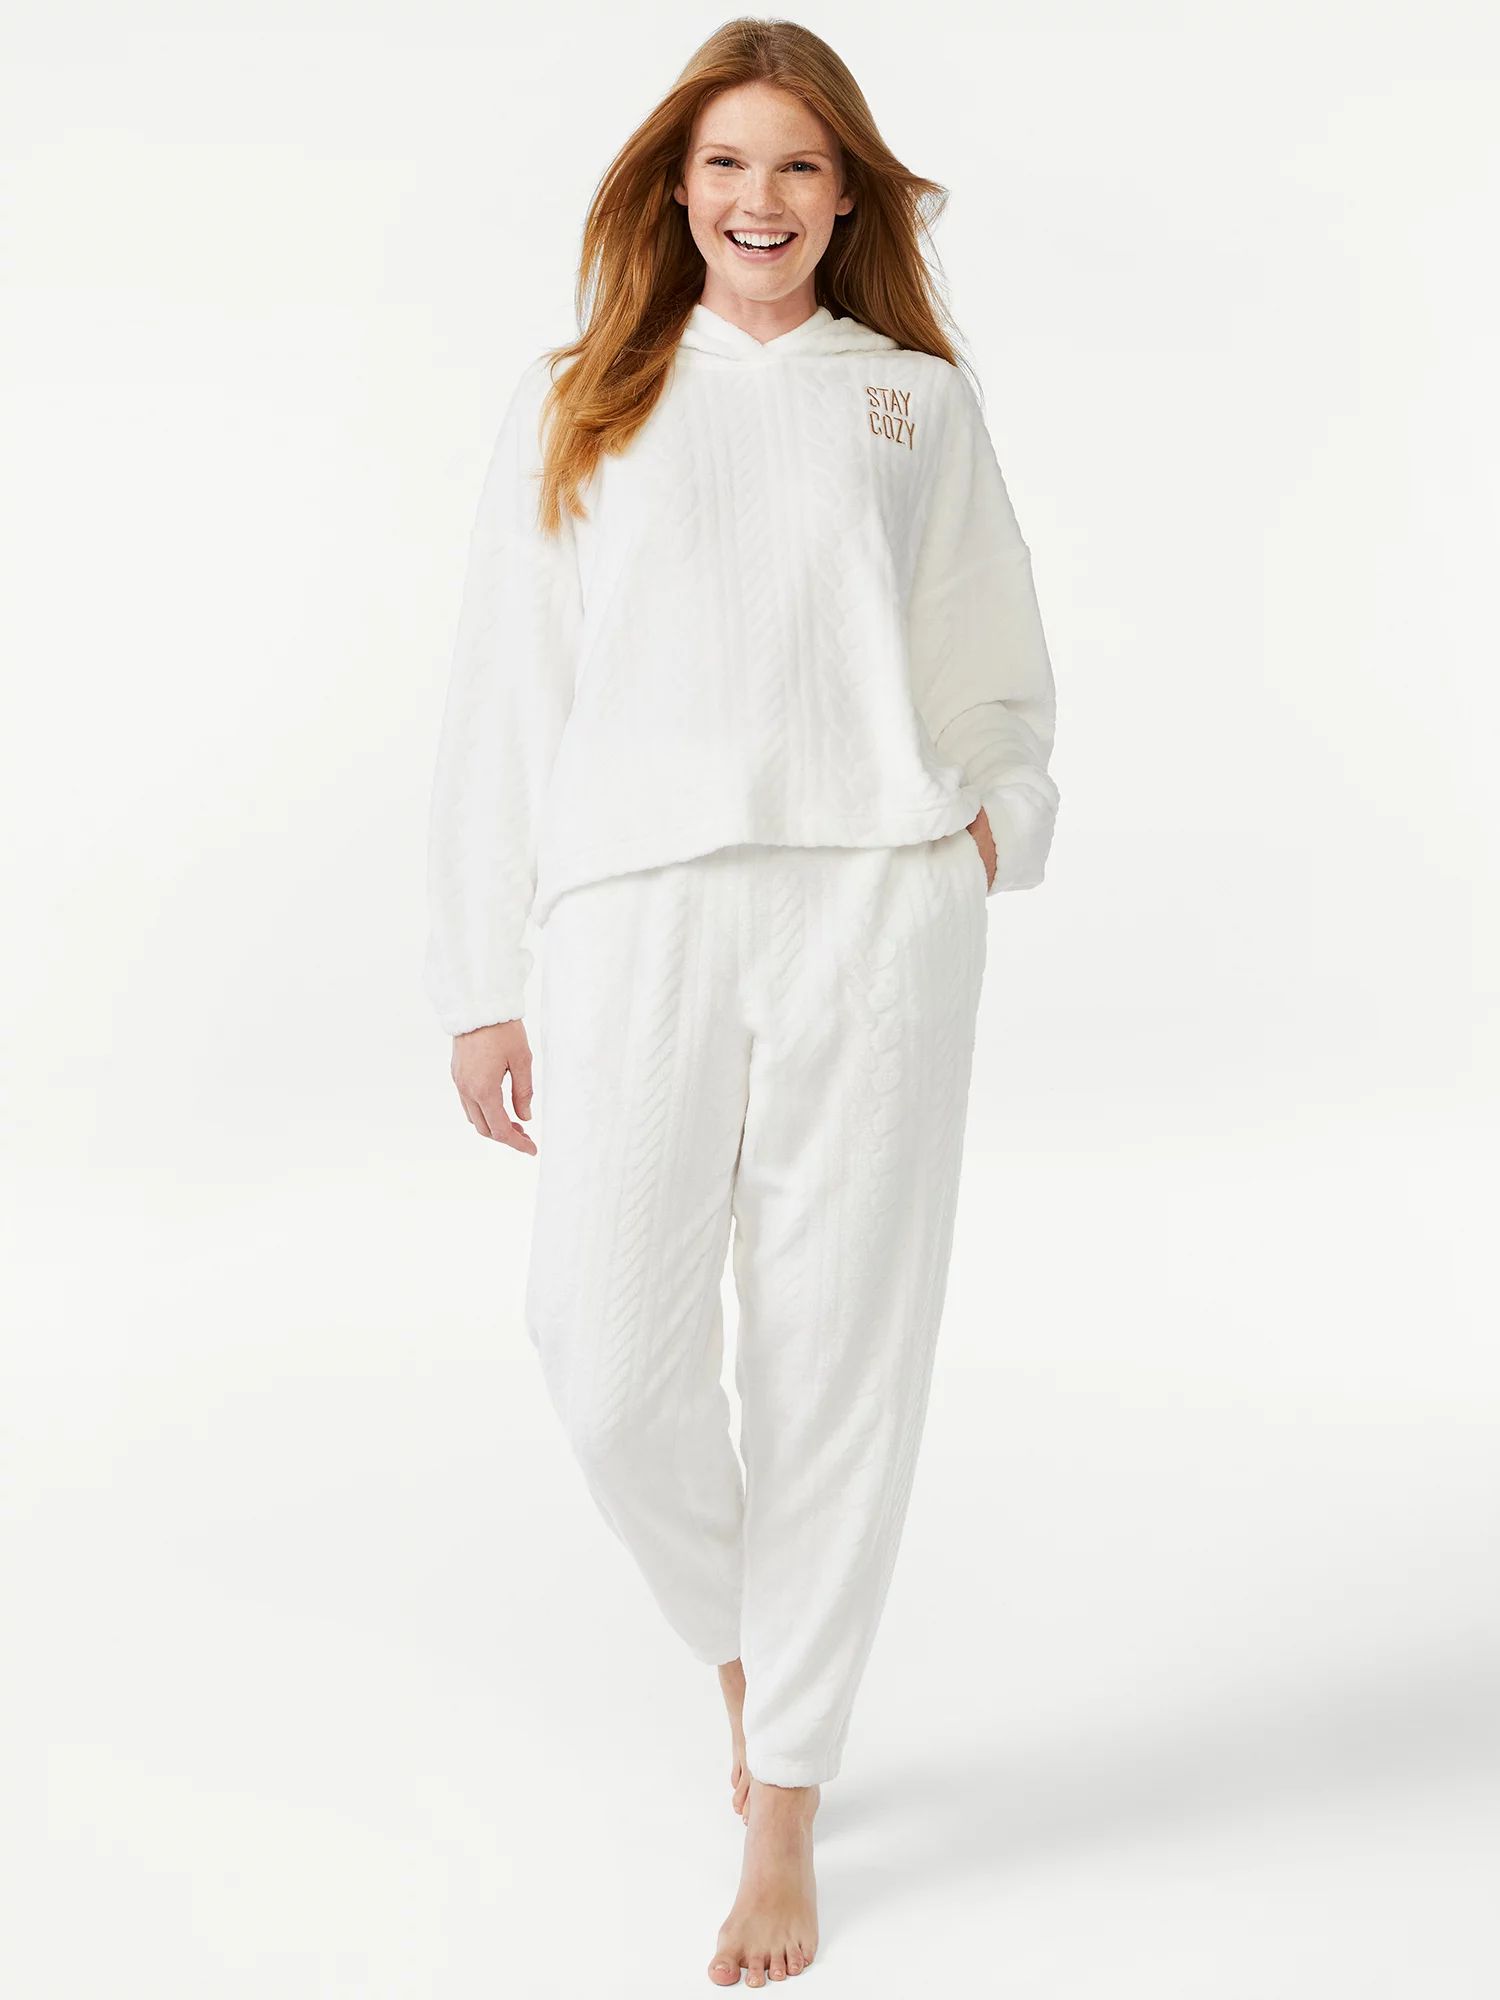 Joyspun Women's Plush Cable Long Sleeve Hooded Top and Pants Pajama Set, 2-Piece, Sizes up to 3X | Walmart (US)